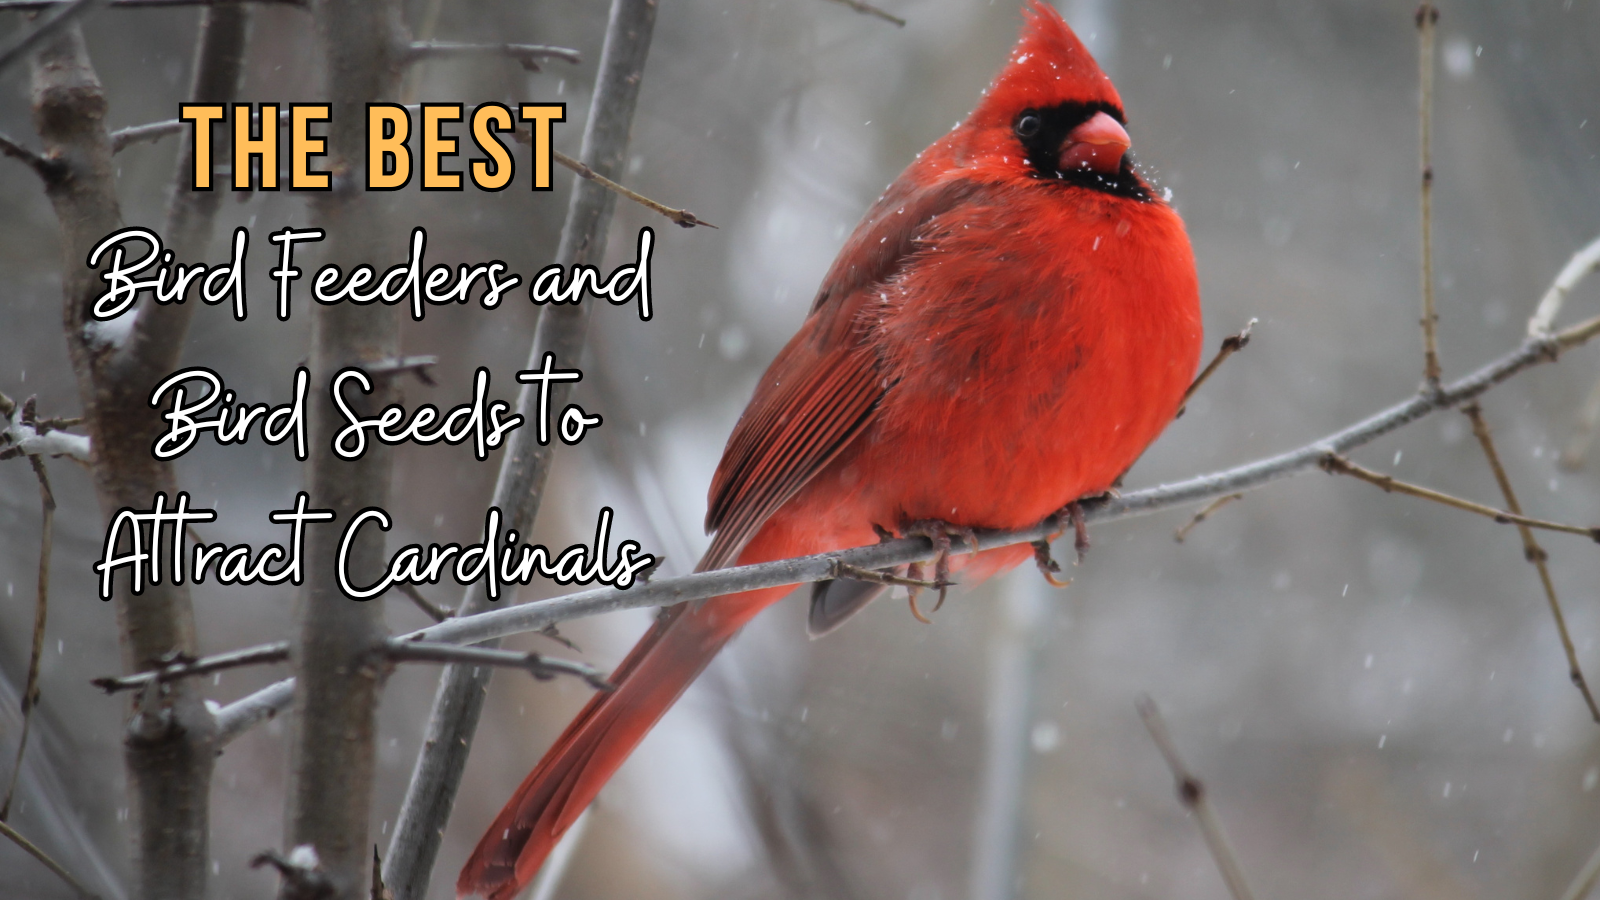 The Best Bird Feeders and Bird Seeds to Attract Cardinals